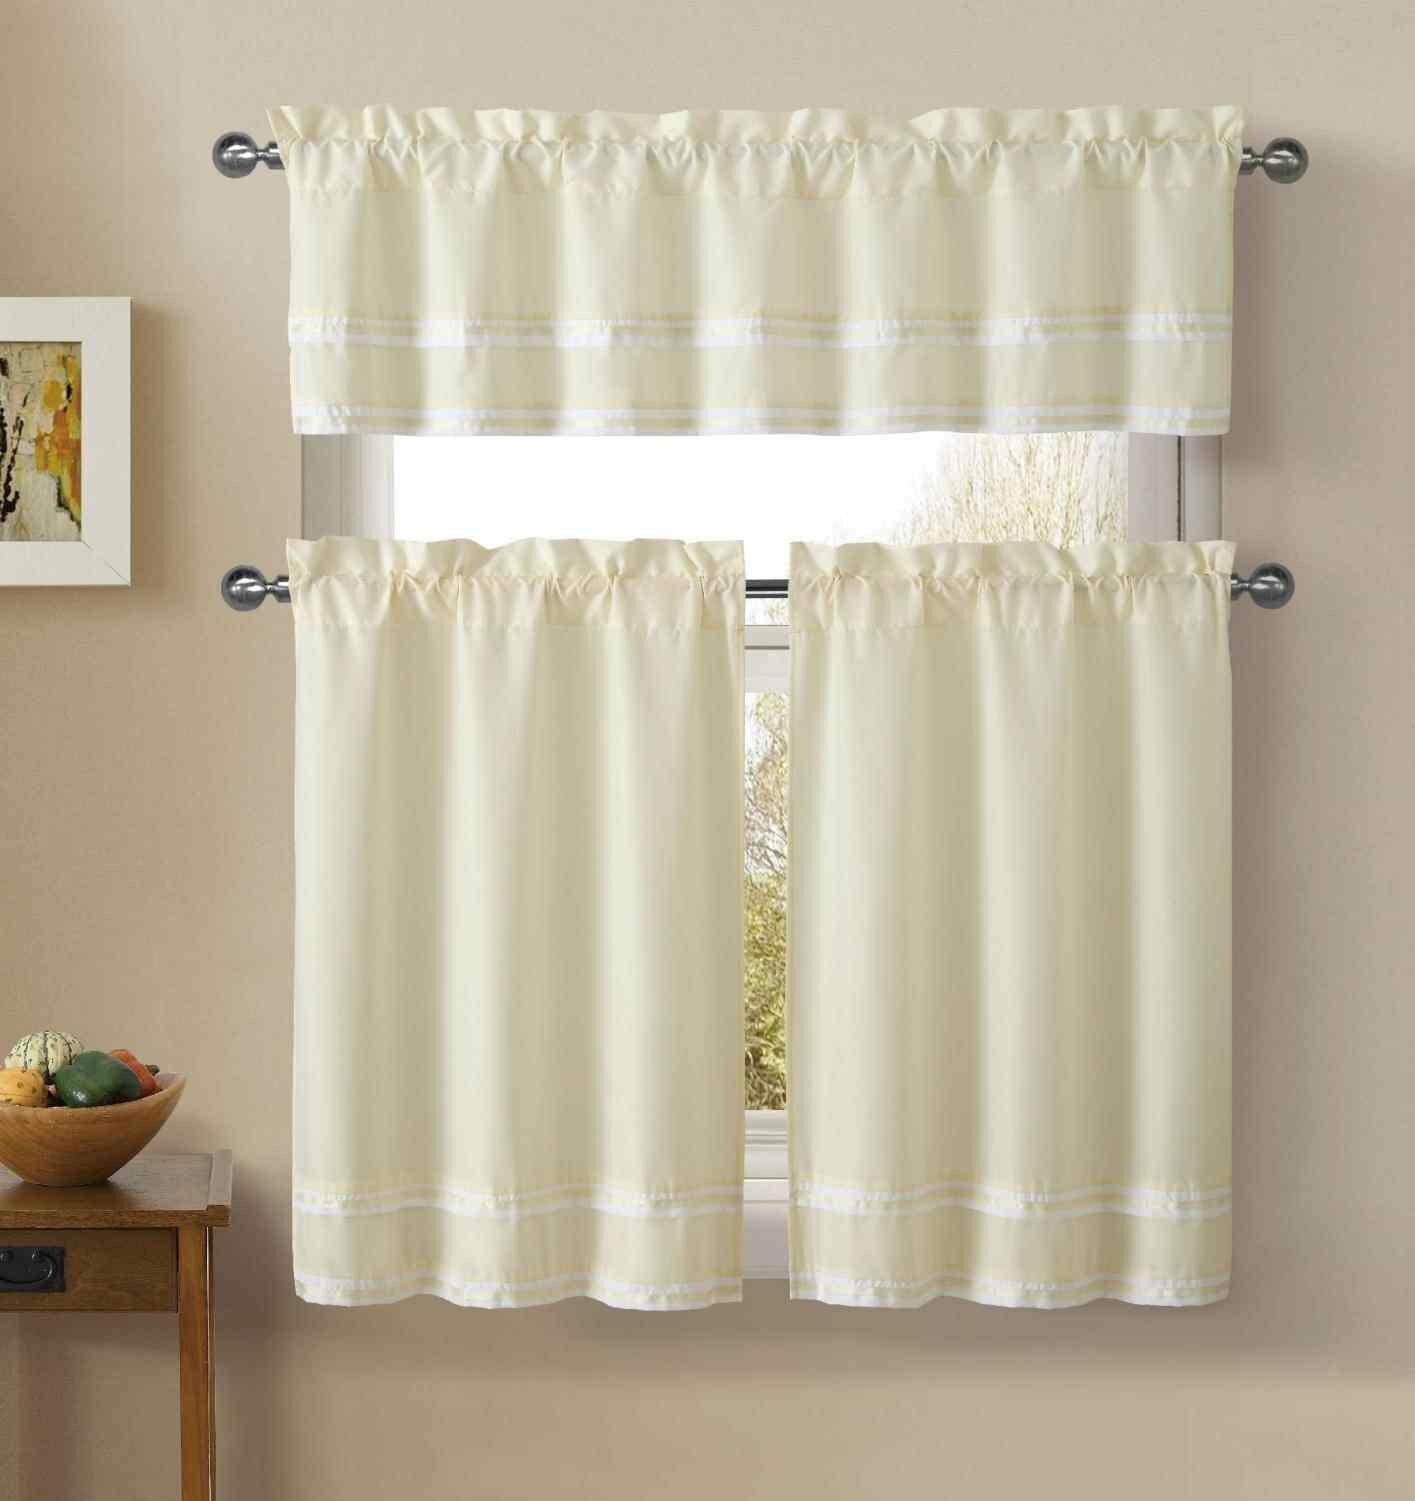 Ikea Shower Curtain for Best Your Bathroom Decoration: Ikea Shower Curtain | Shower Curtain Rod | Ikea Shower Pole